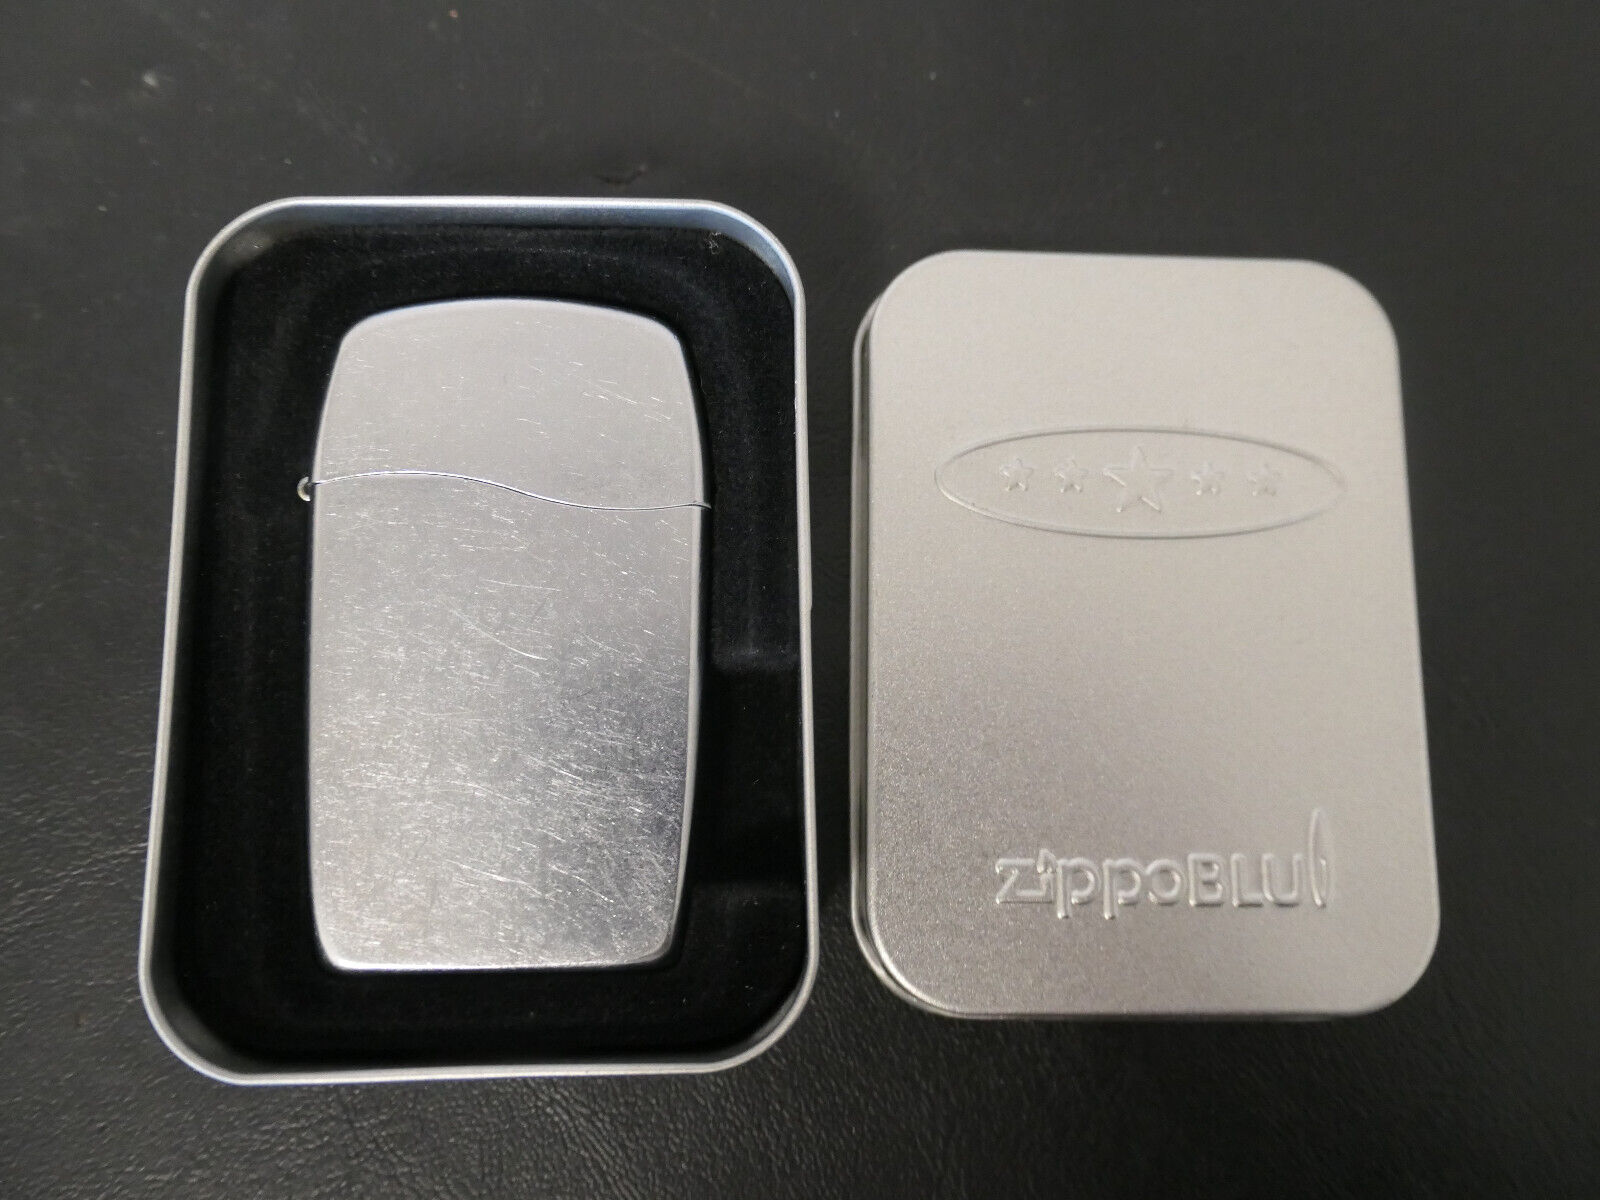 ZIPPO BLU Lighter W/Case